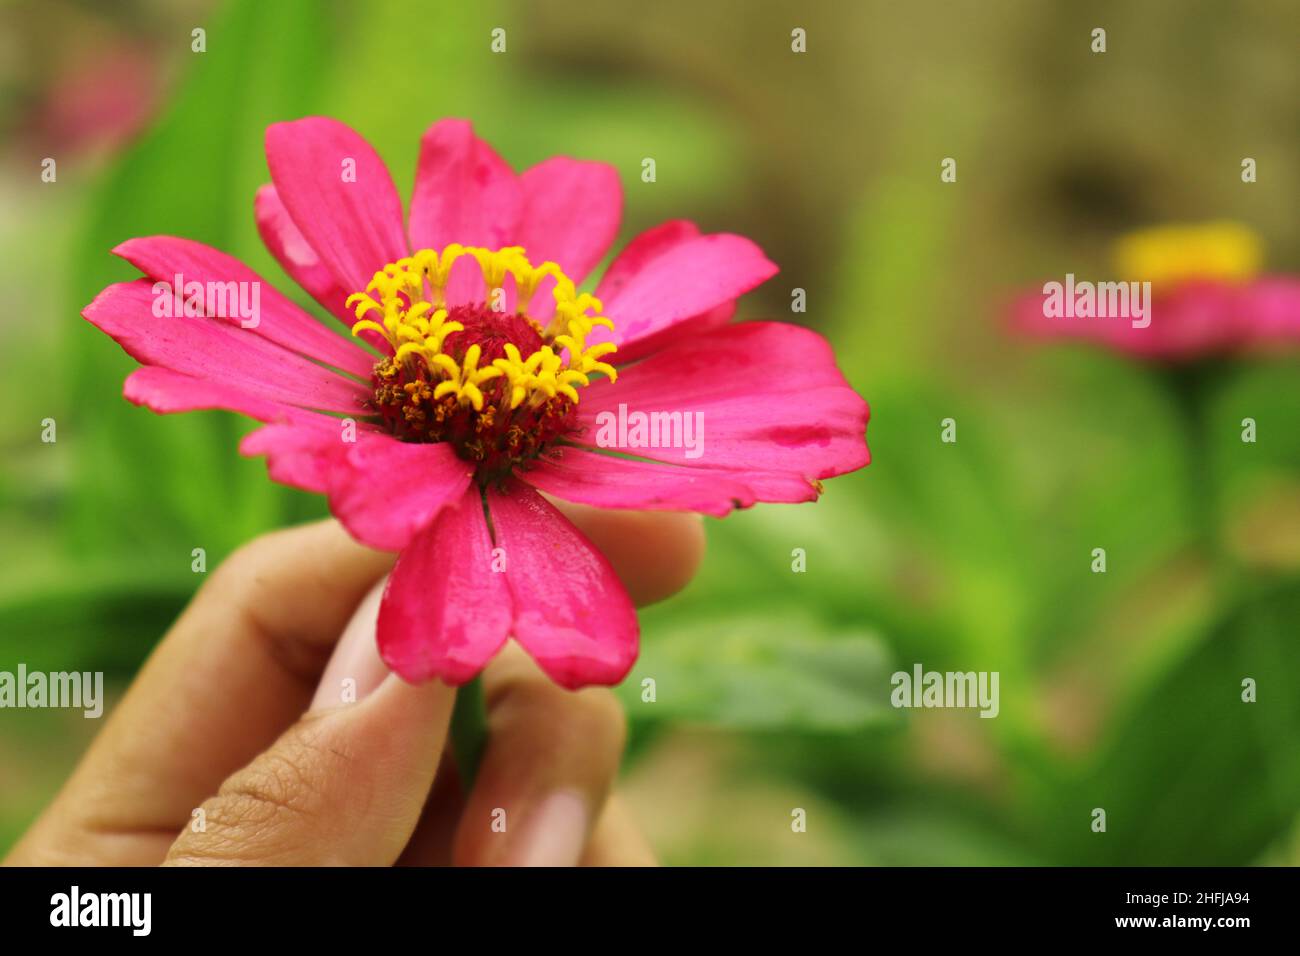 Rosa Zinnia fiore fiorisce splendidamente Foto Stock